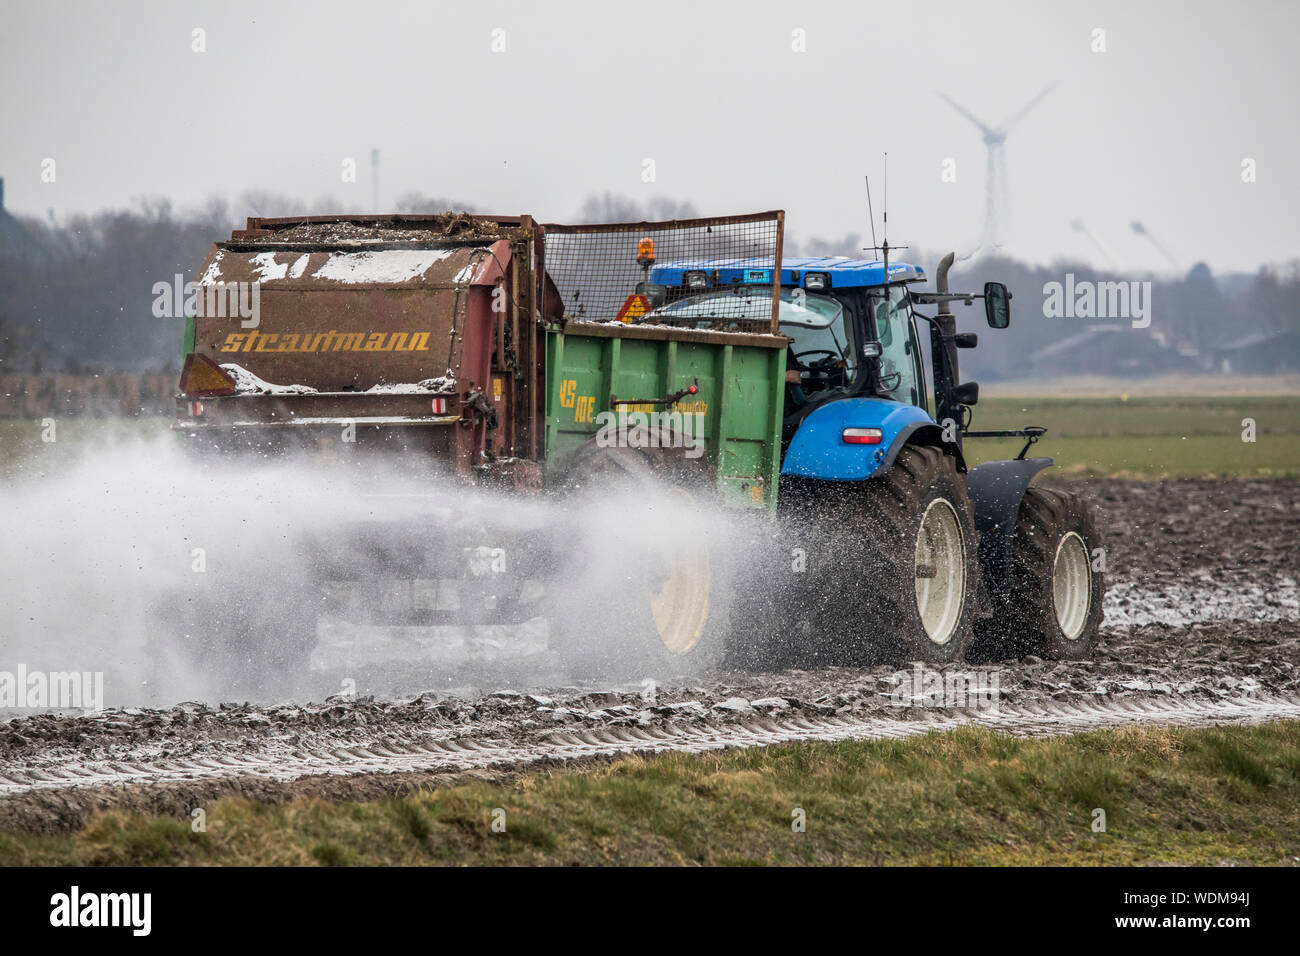 A field is fertilized in spring, a tractor applies fertilizer to a field, Stock Photo